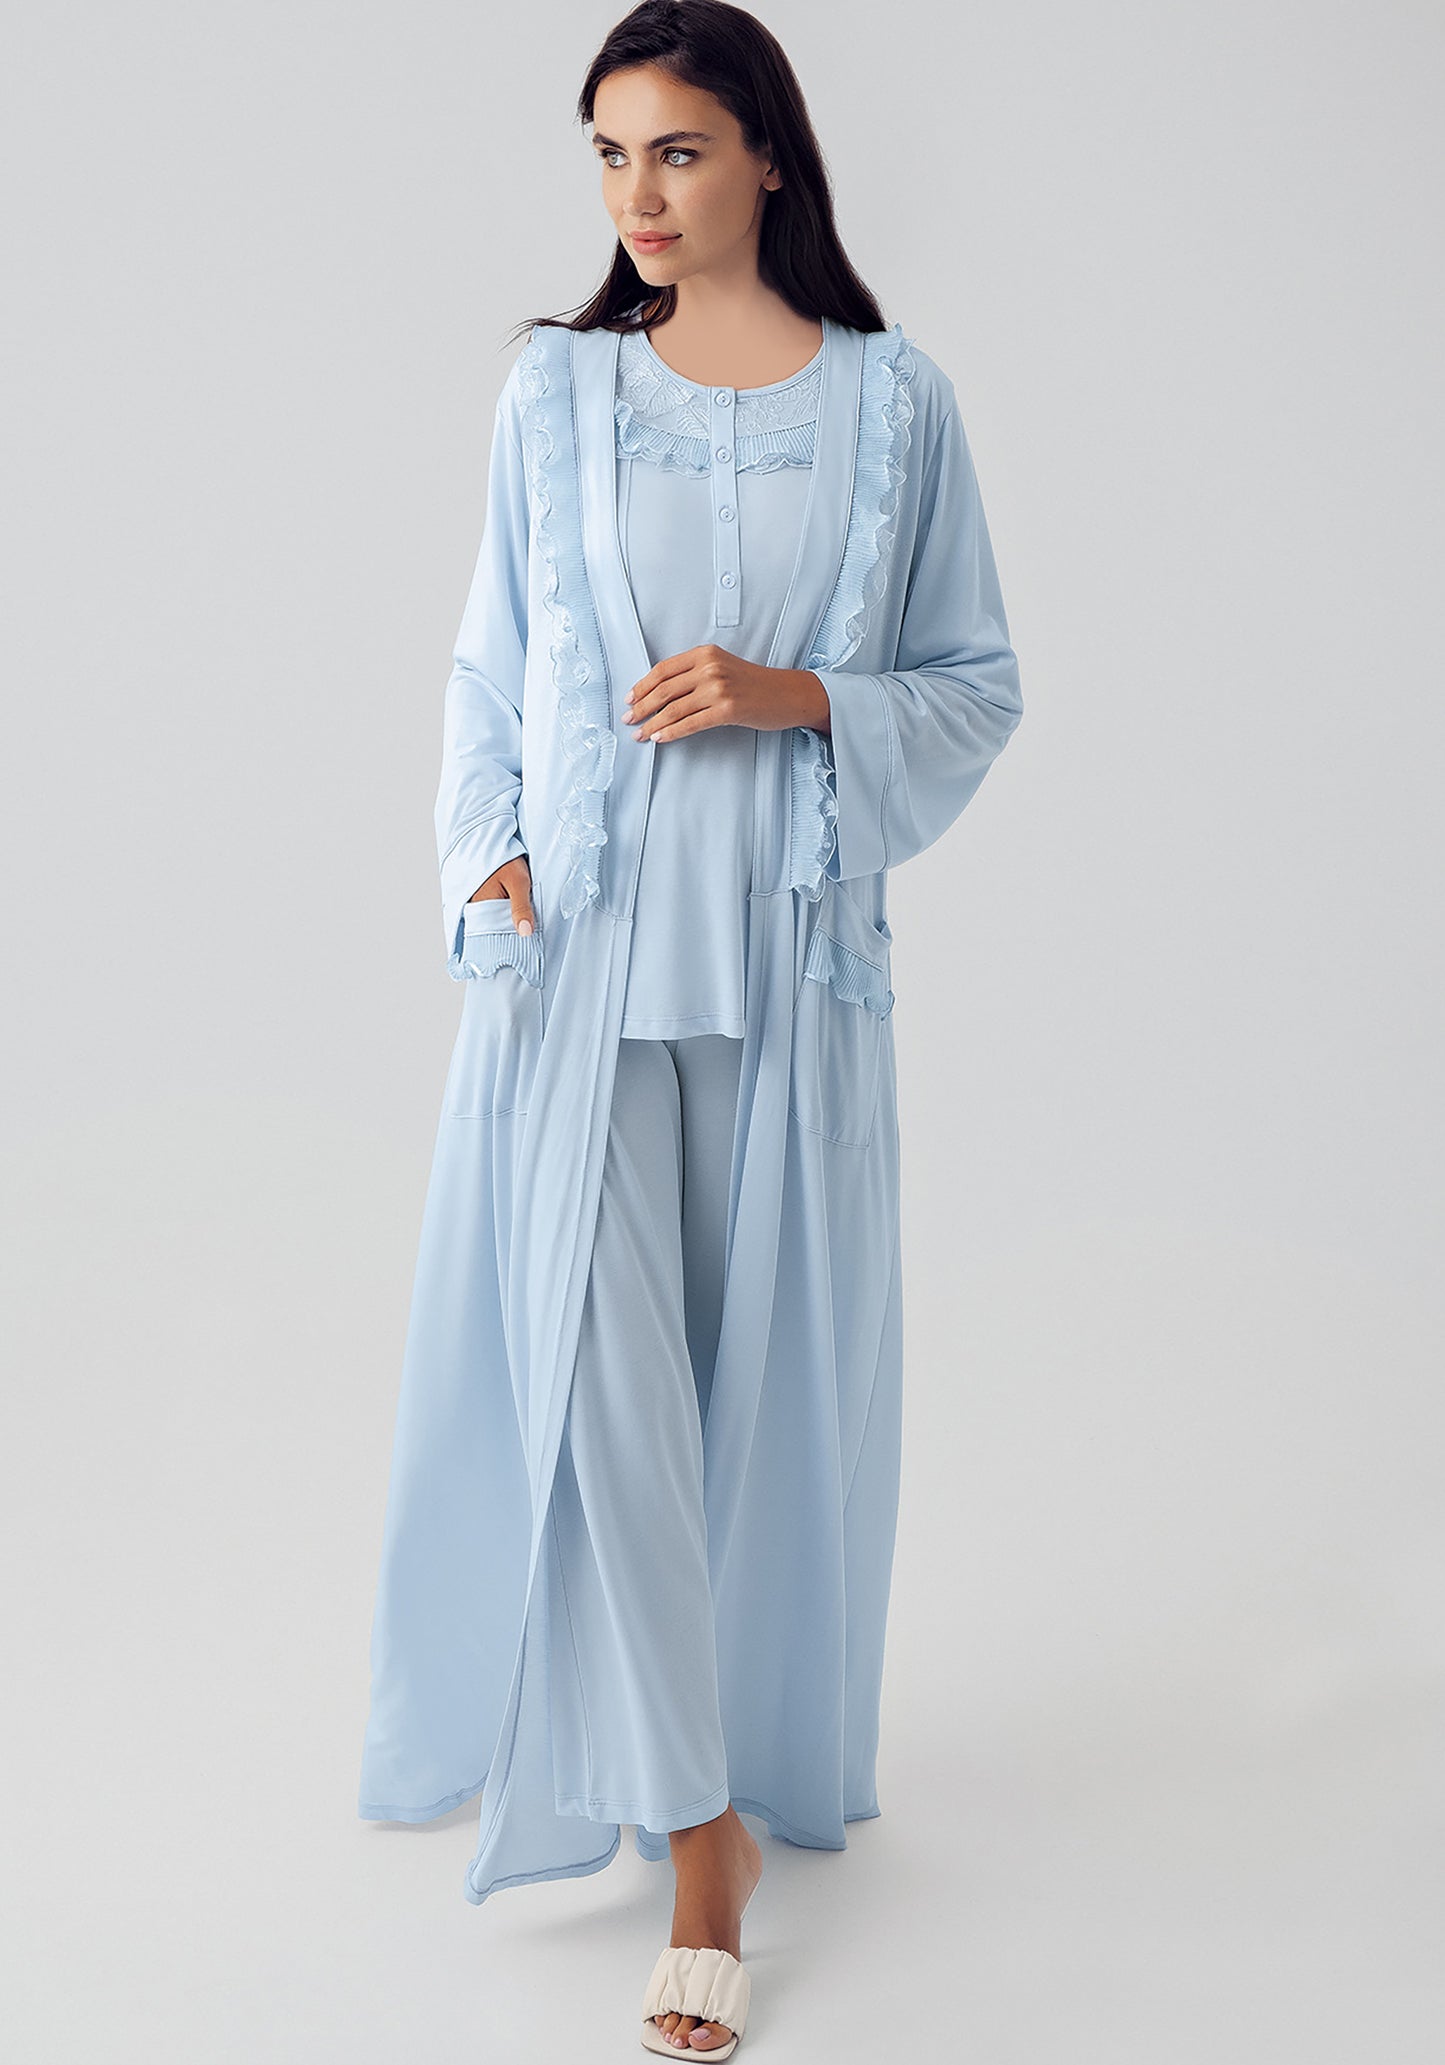 S&L 3 Piece Robe Pajama Set